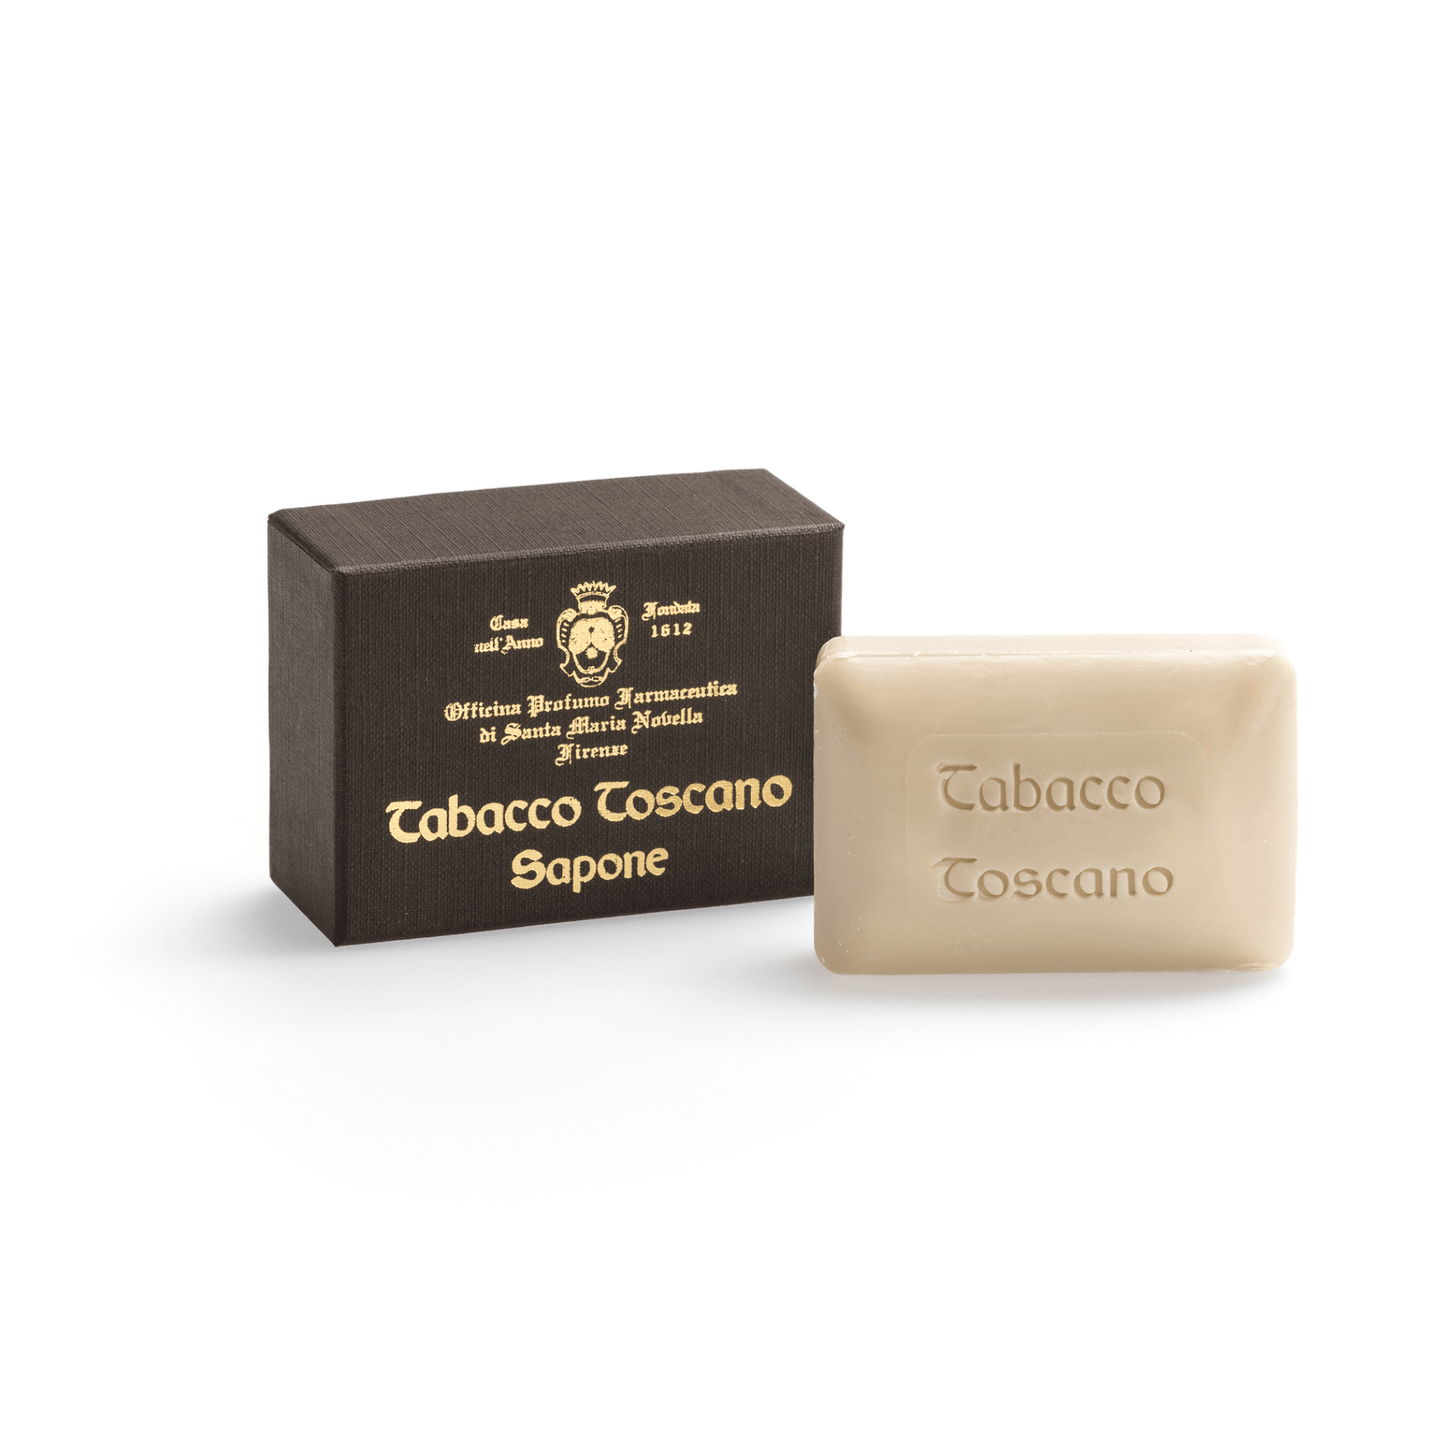 Primary Image of Tabacco Toscano Soap (Tabacco Toscano Sapone)